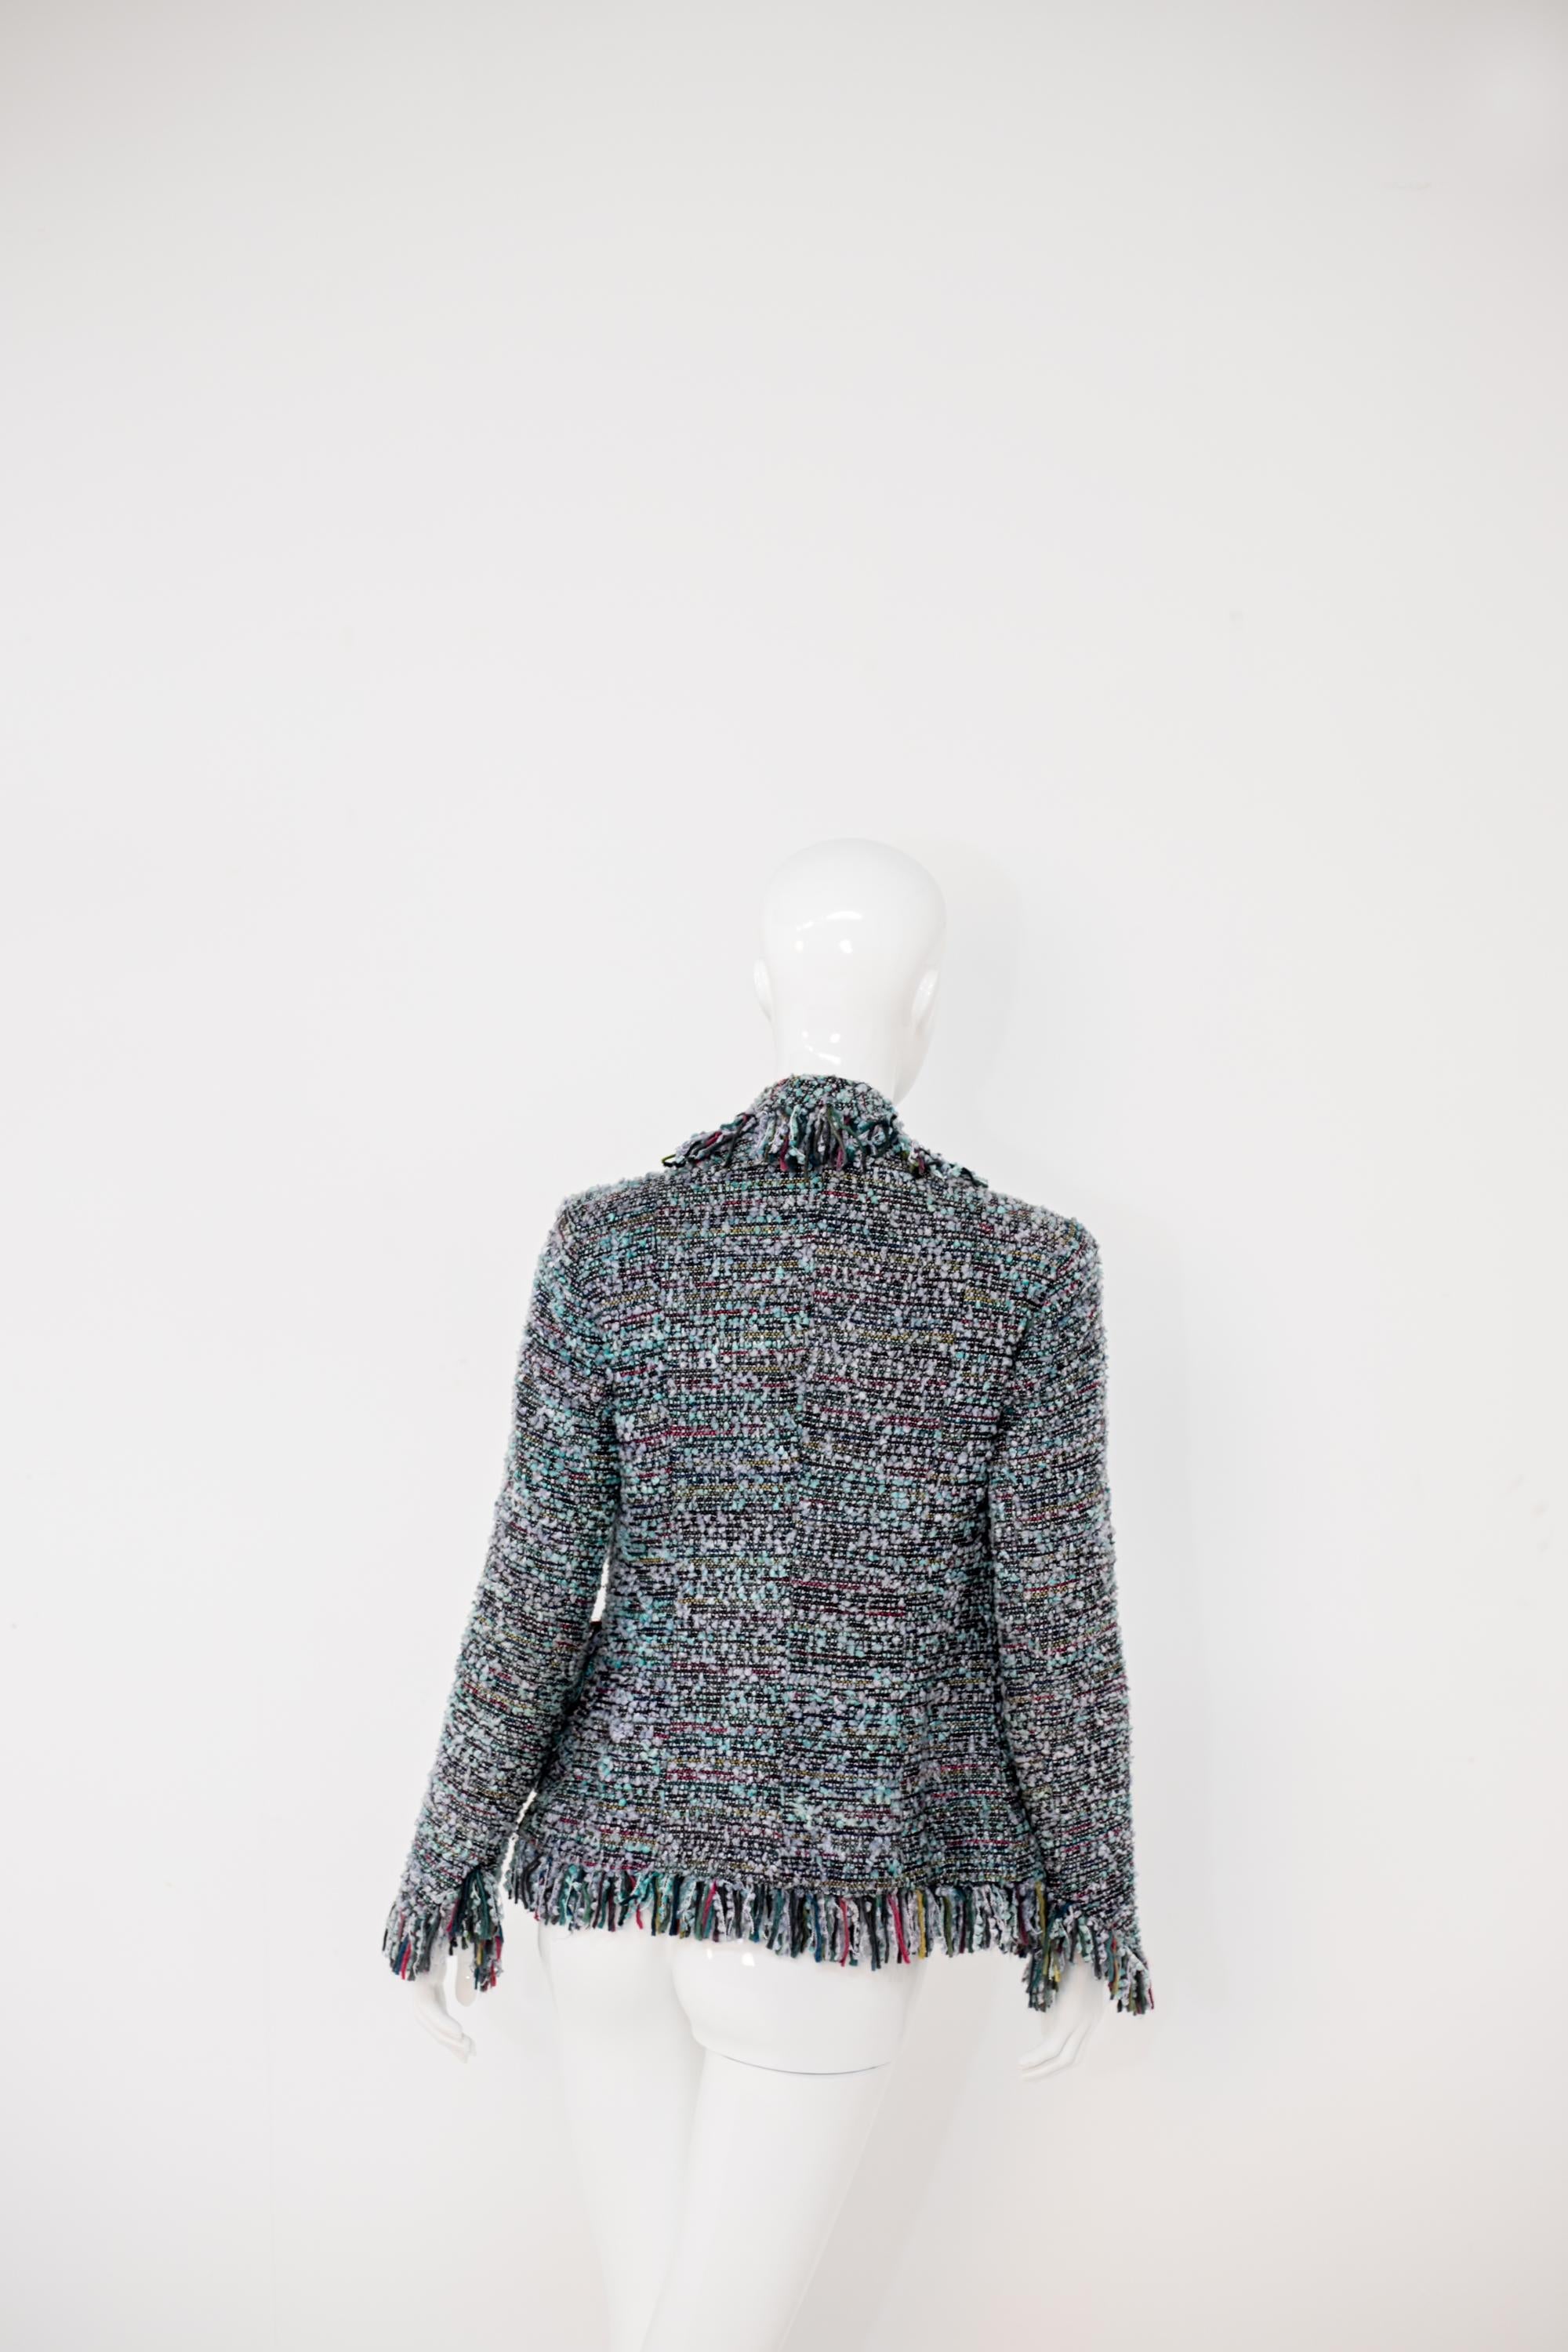 Emilia Andrich Fringed Blazer in Wool For Sale 6